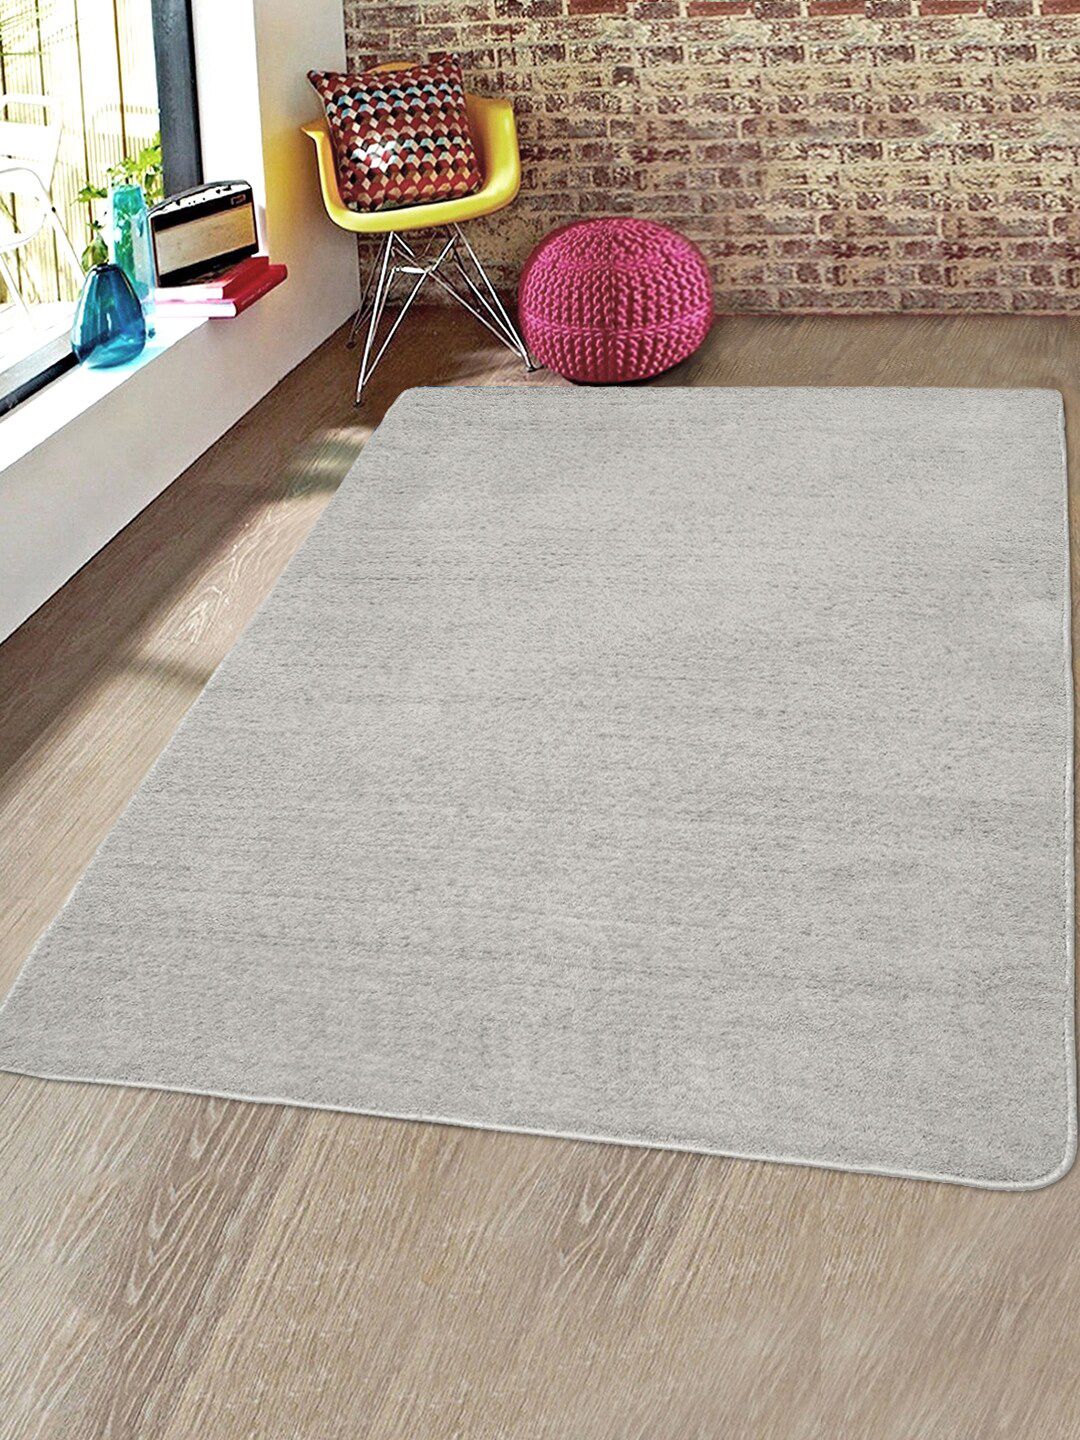 Saral Home Grey-Melange Solid Anti-Skid Carpet Price in India